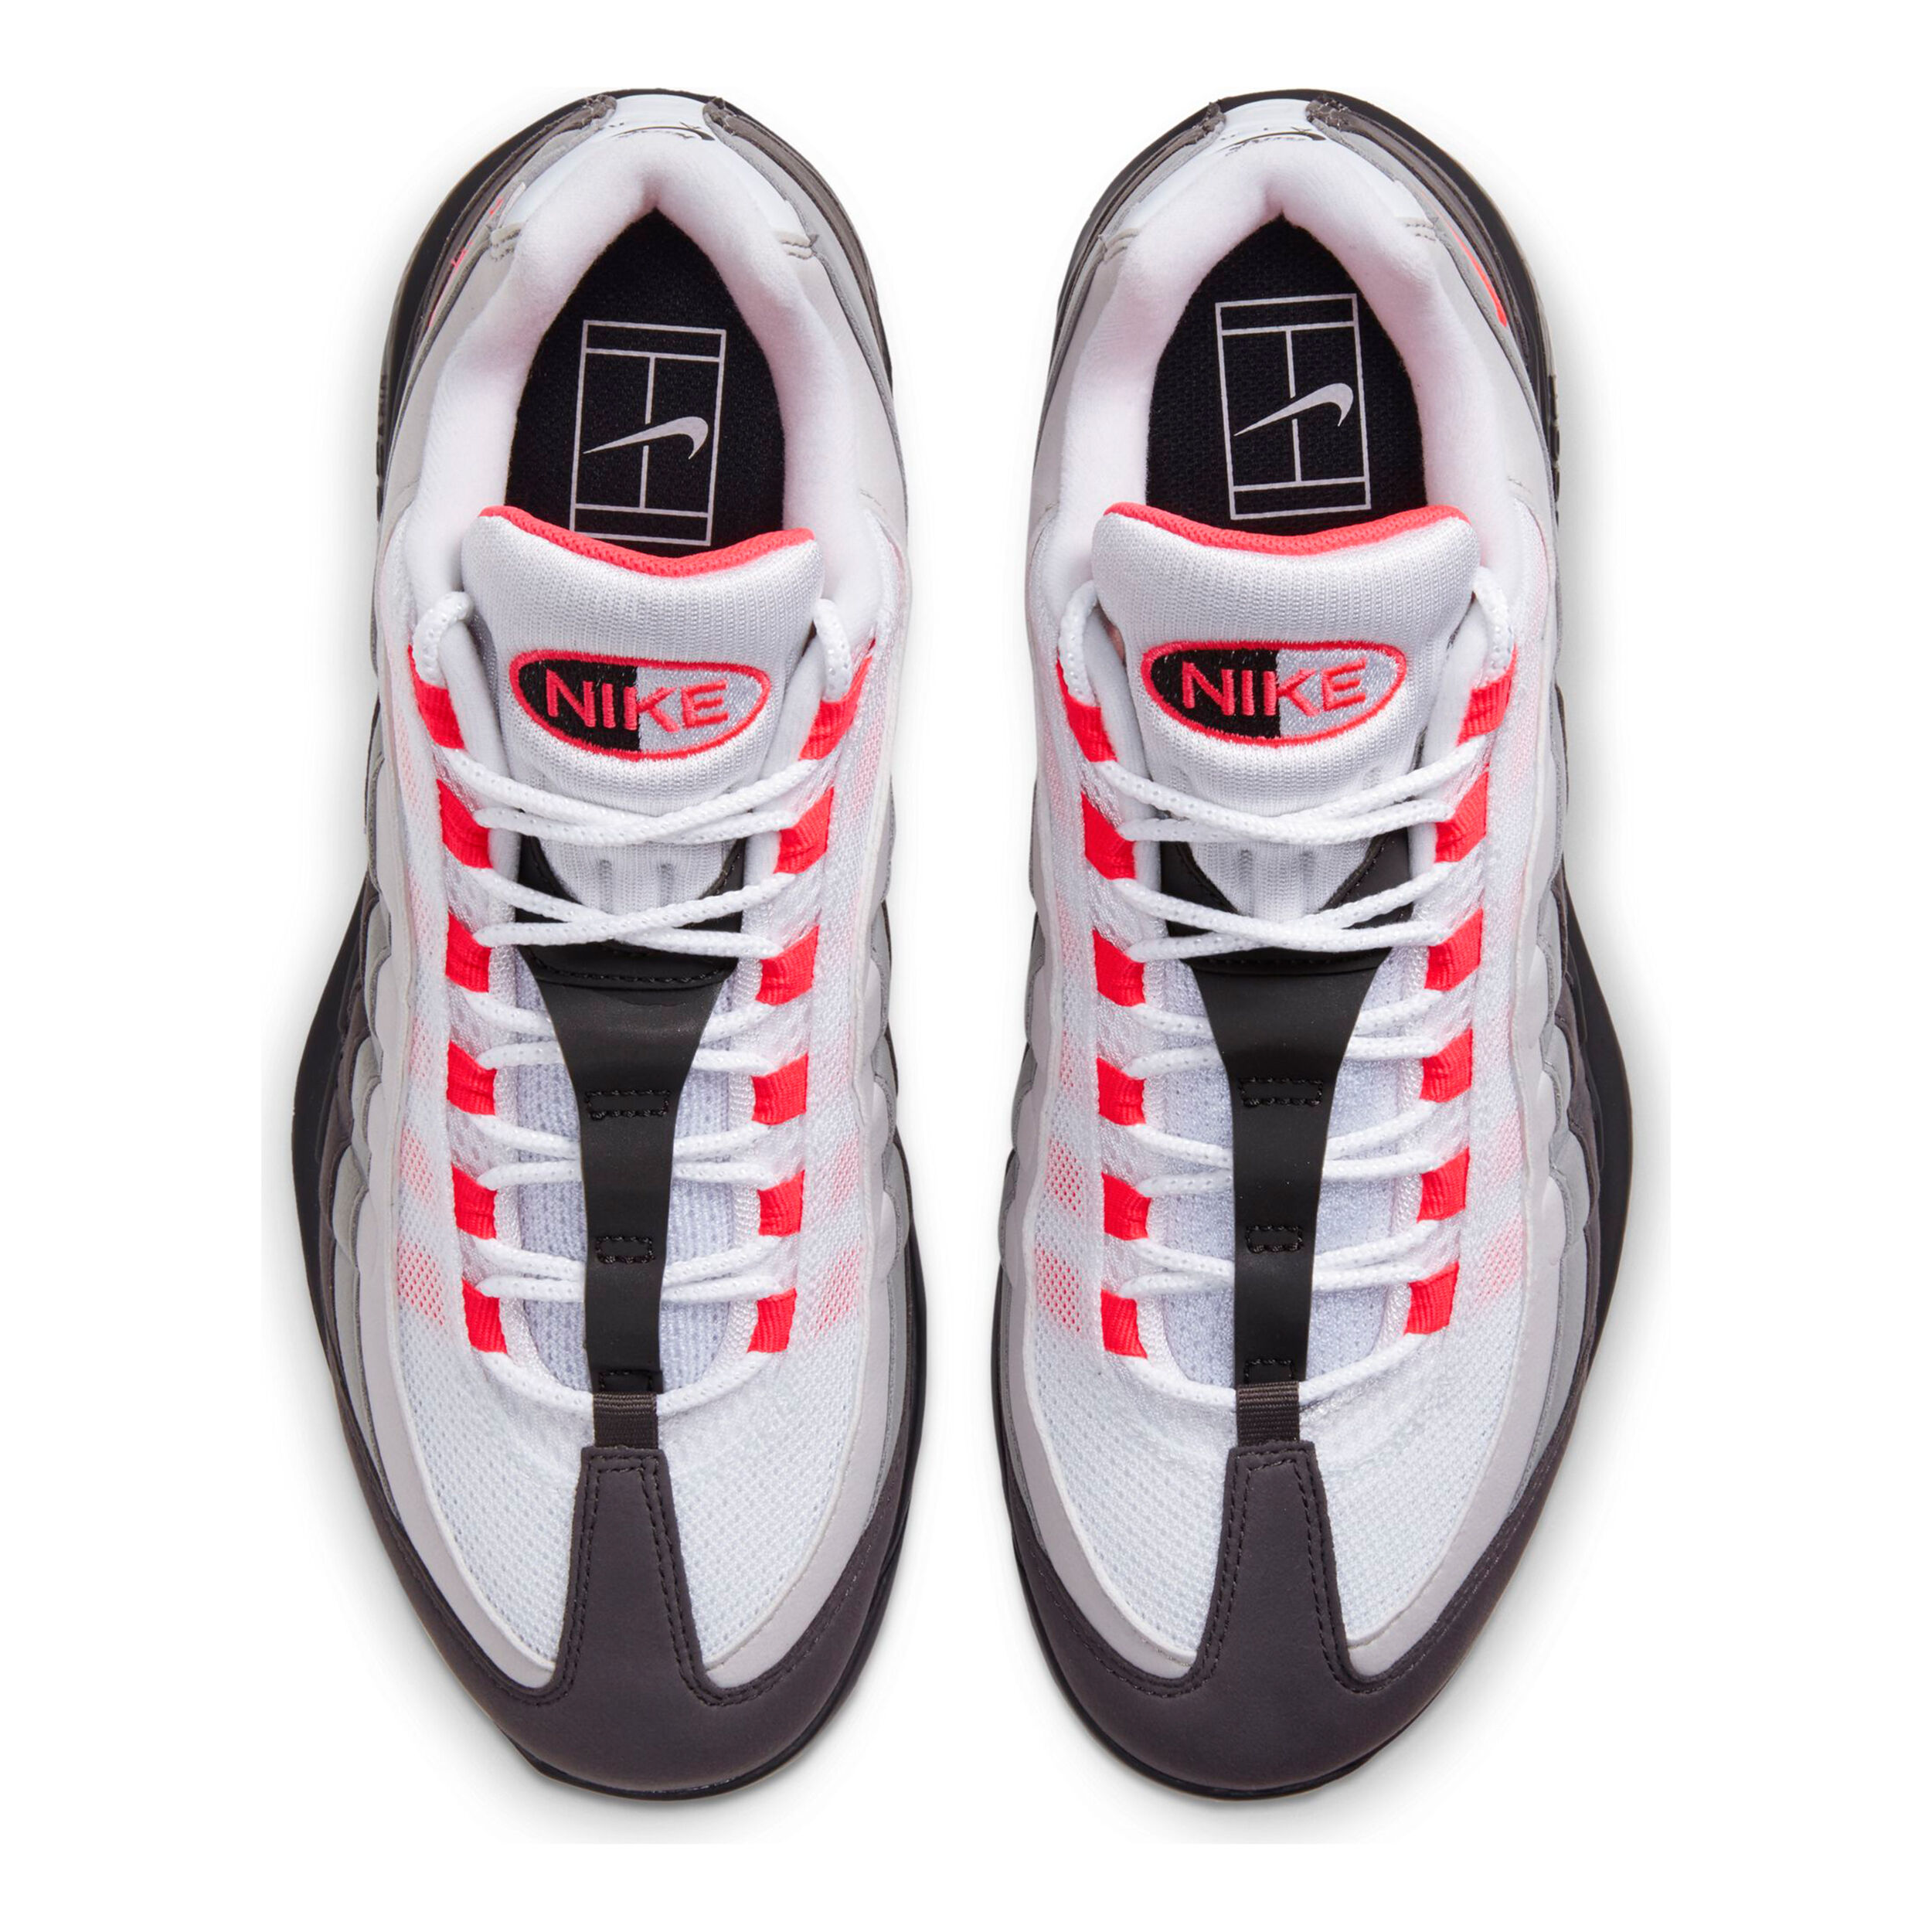 nikecourt zoom vapor x air max 95 men's tennis shoe